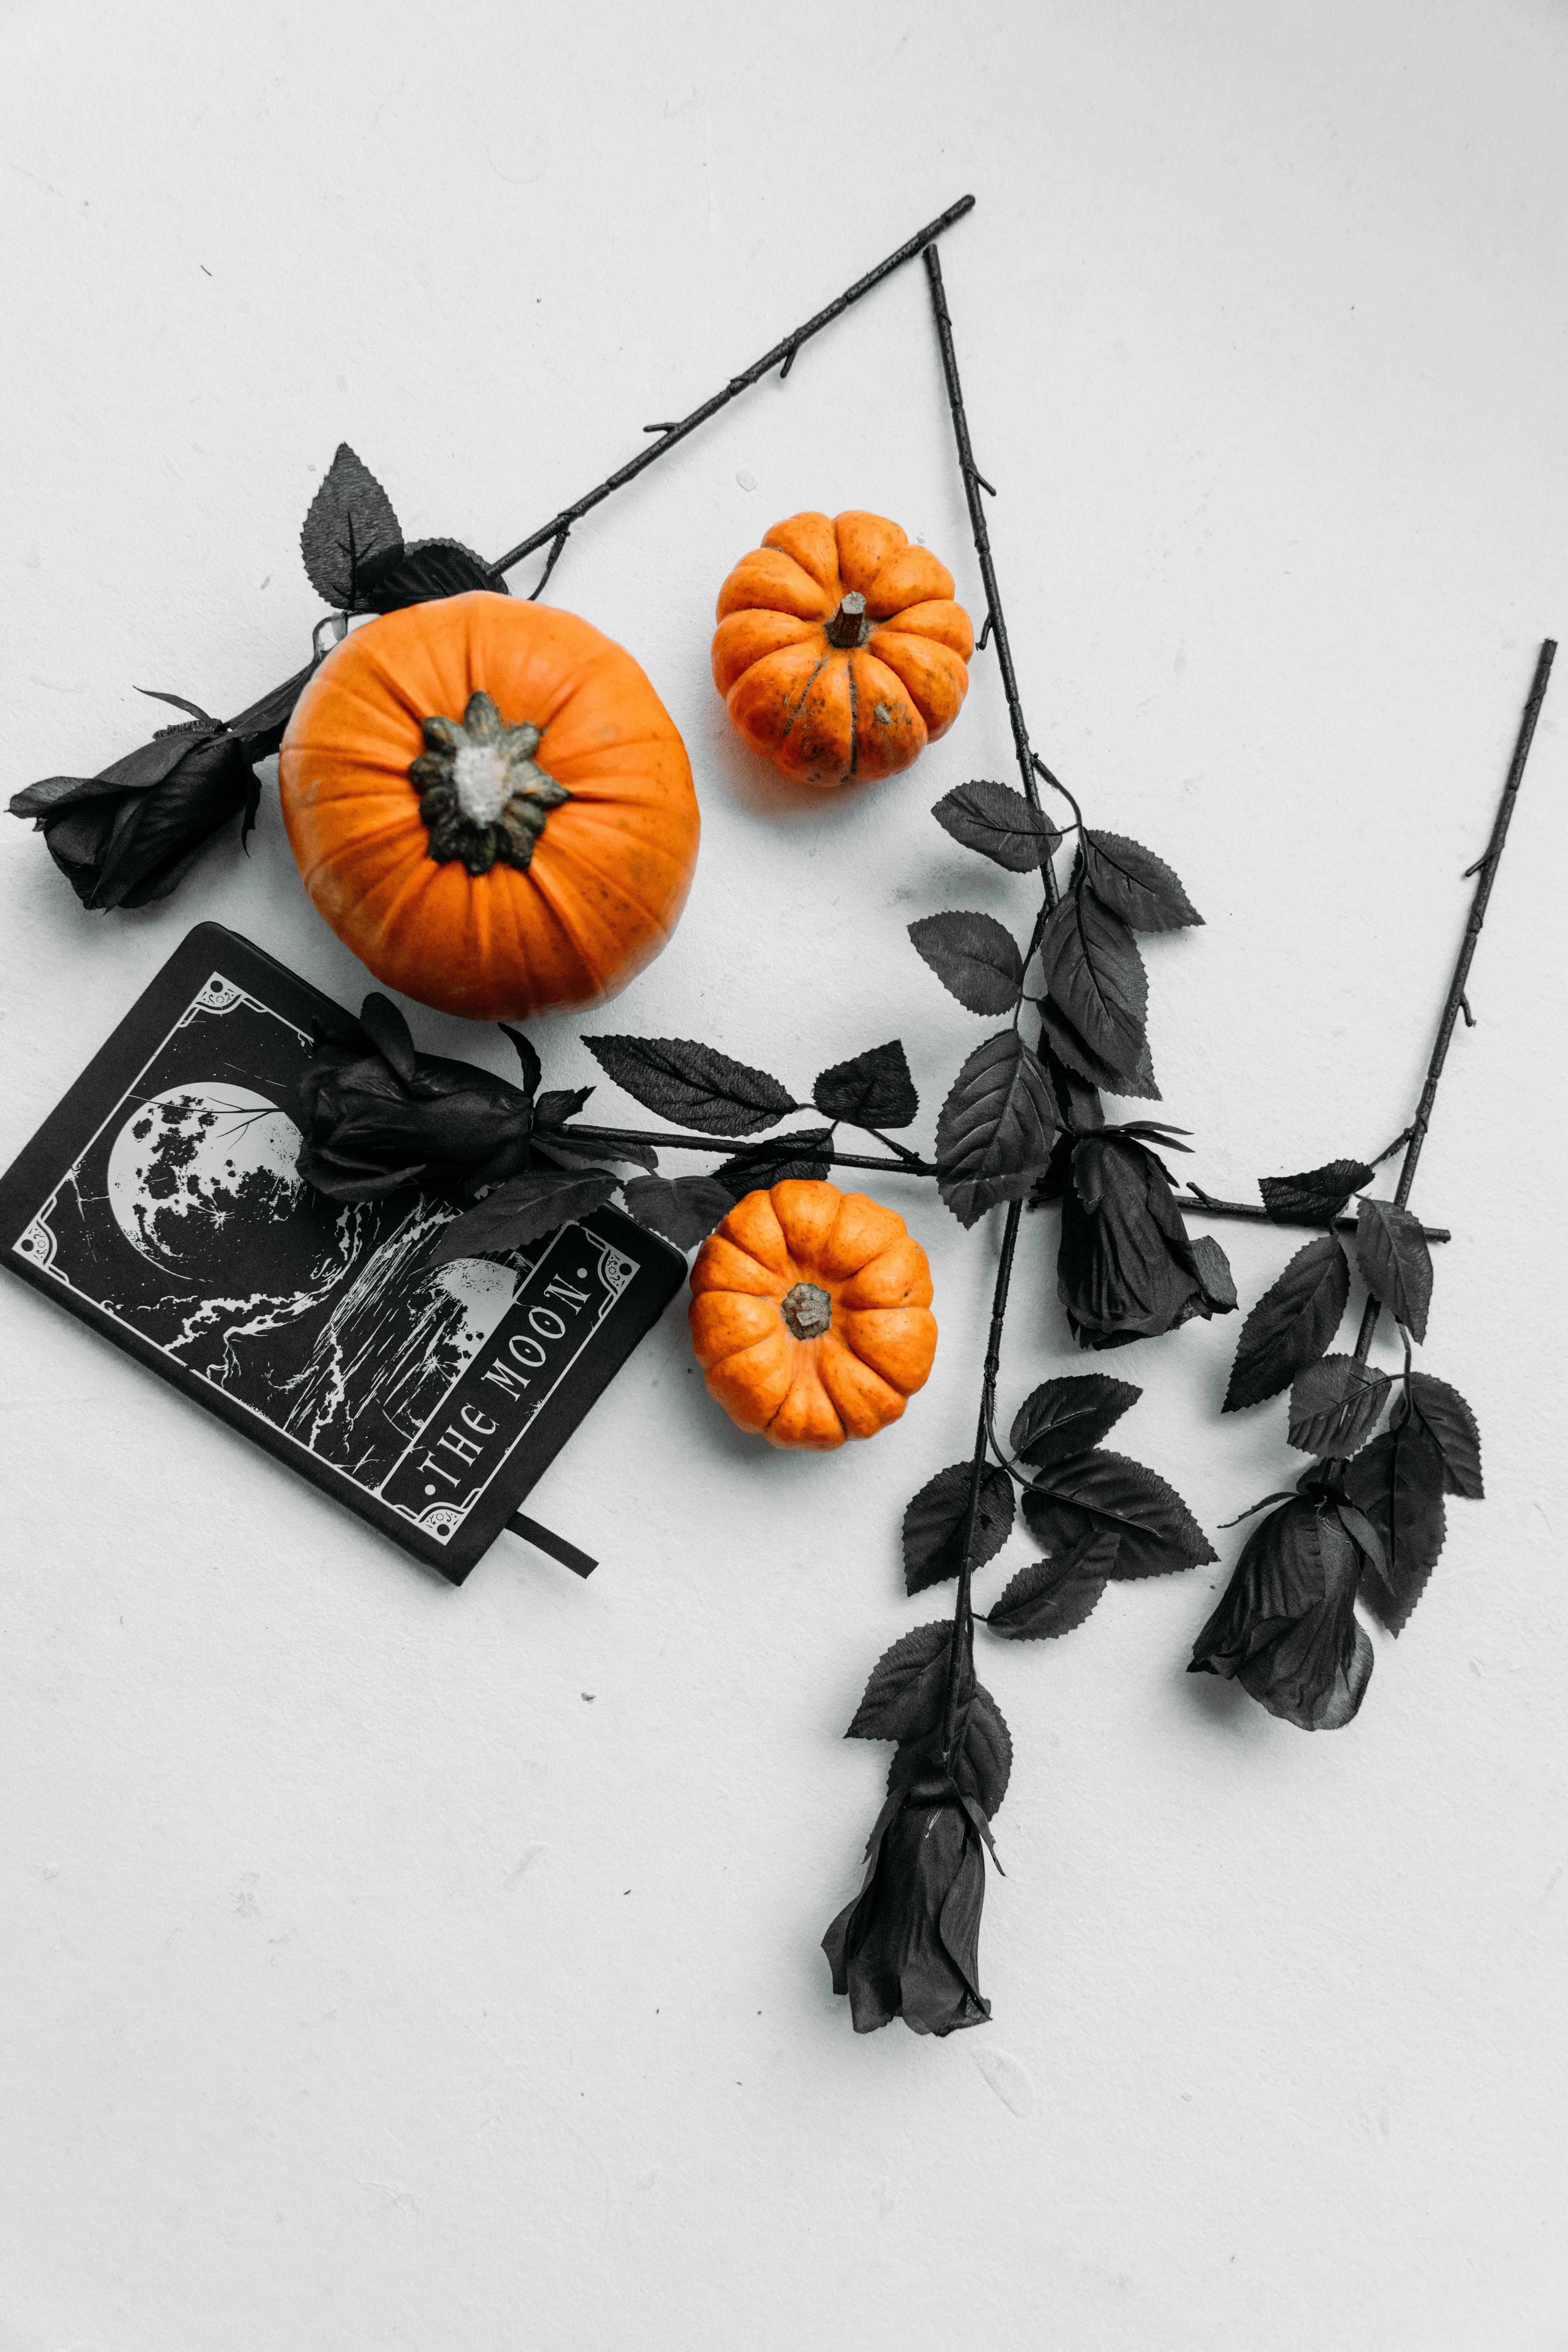 Flat lay of pumpkins, a tarot card, and black roses - Halloween